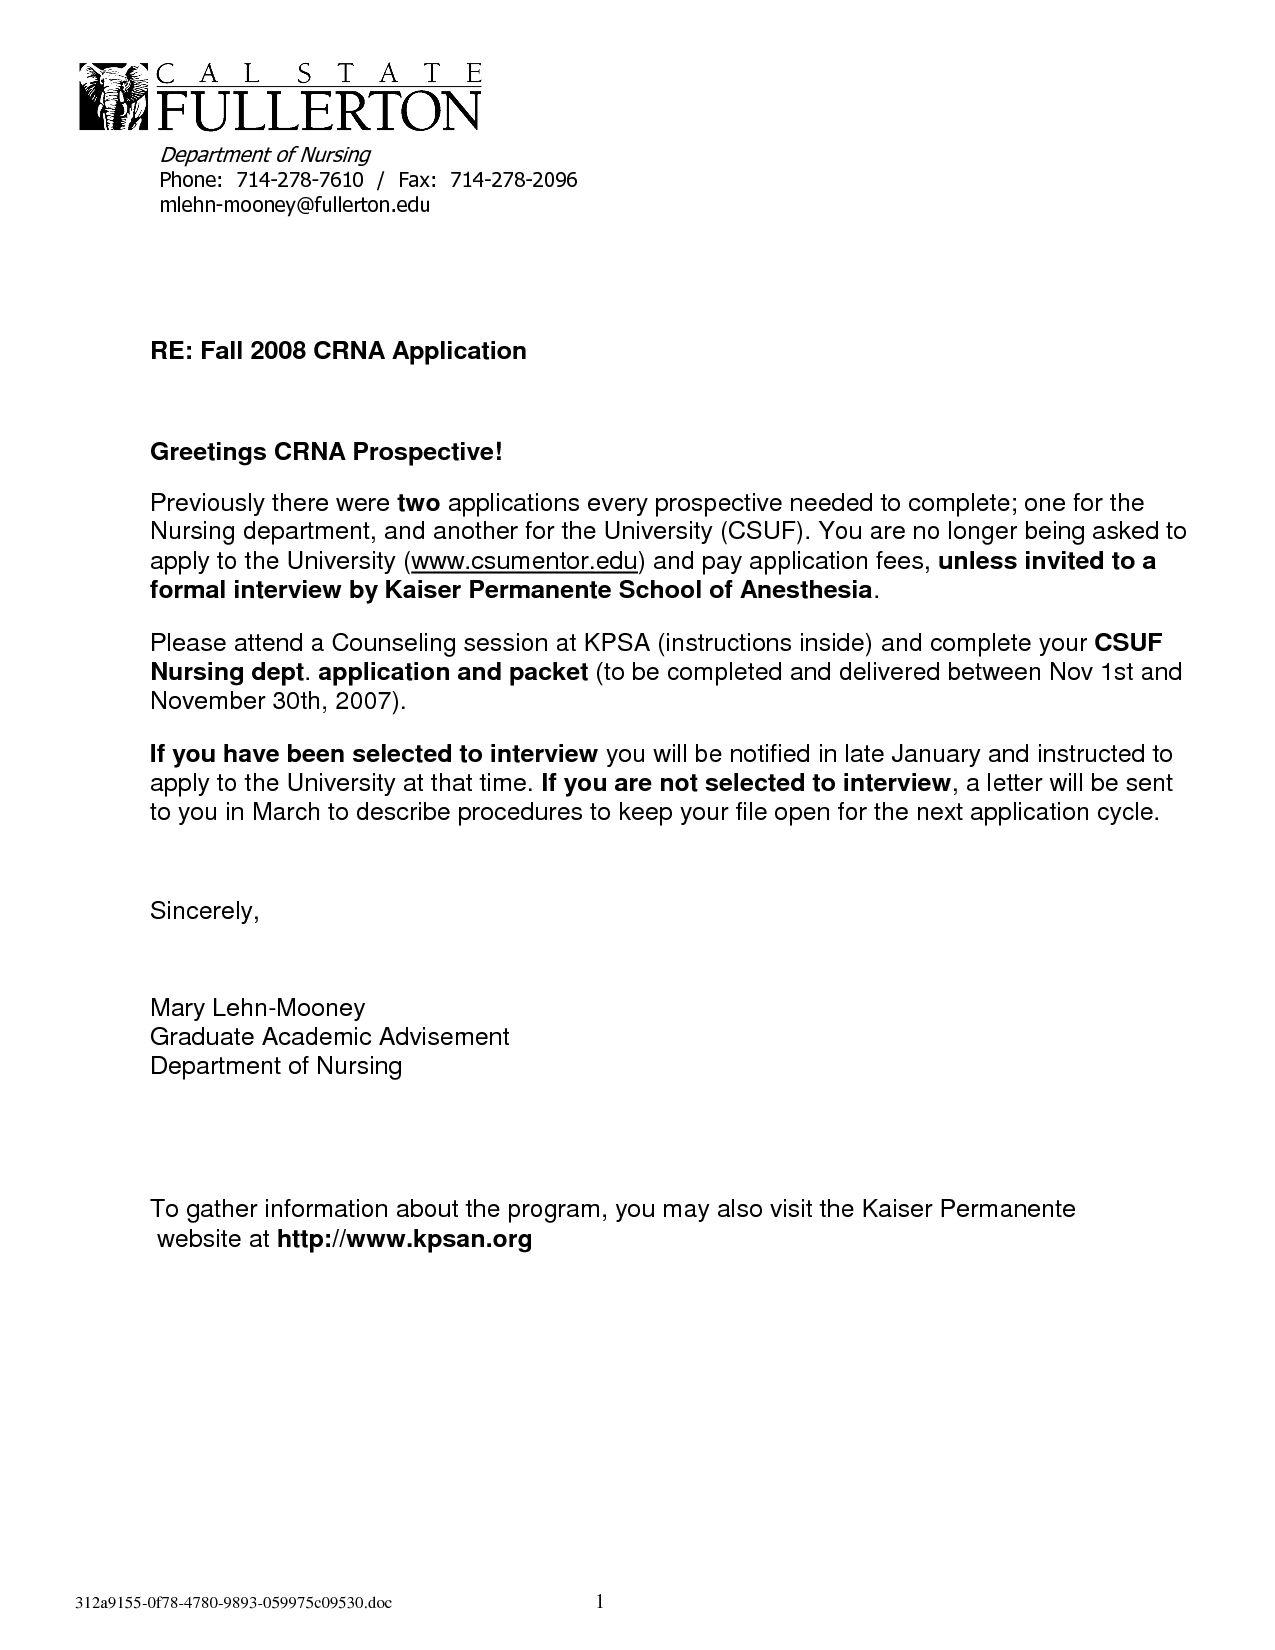 Nurse Recommendation Letter For Employment Akali inside measurements 1275 X 1650